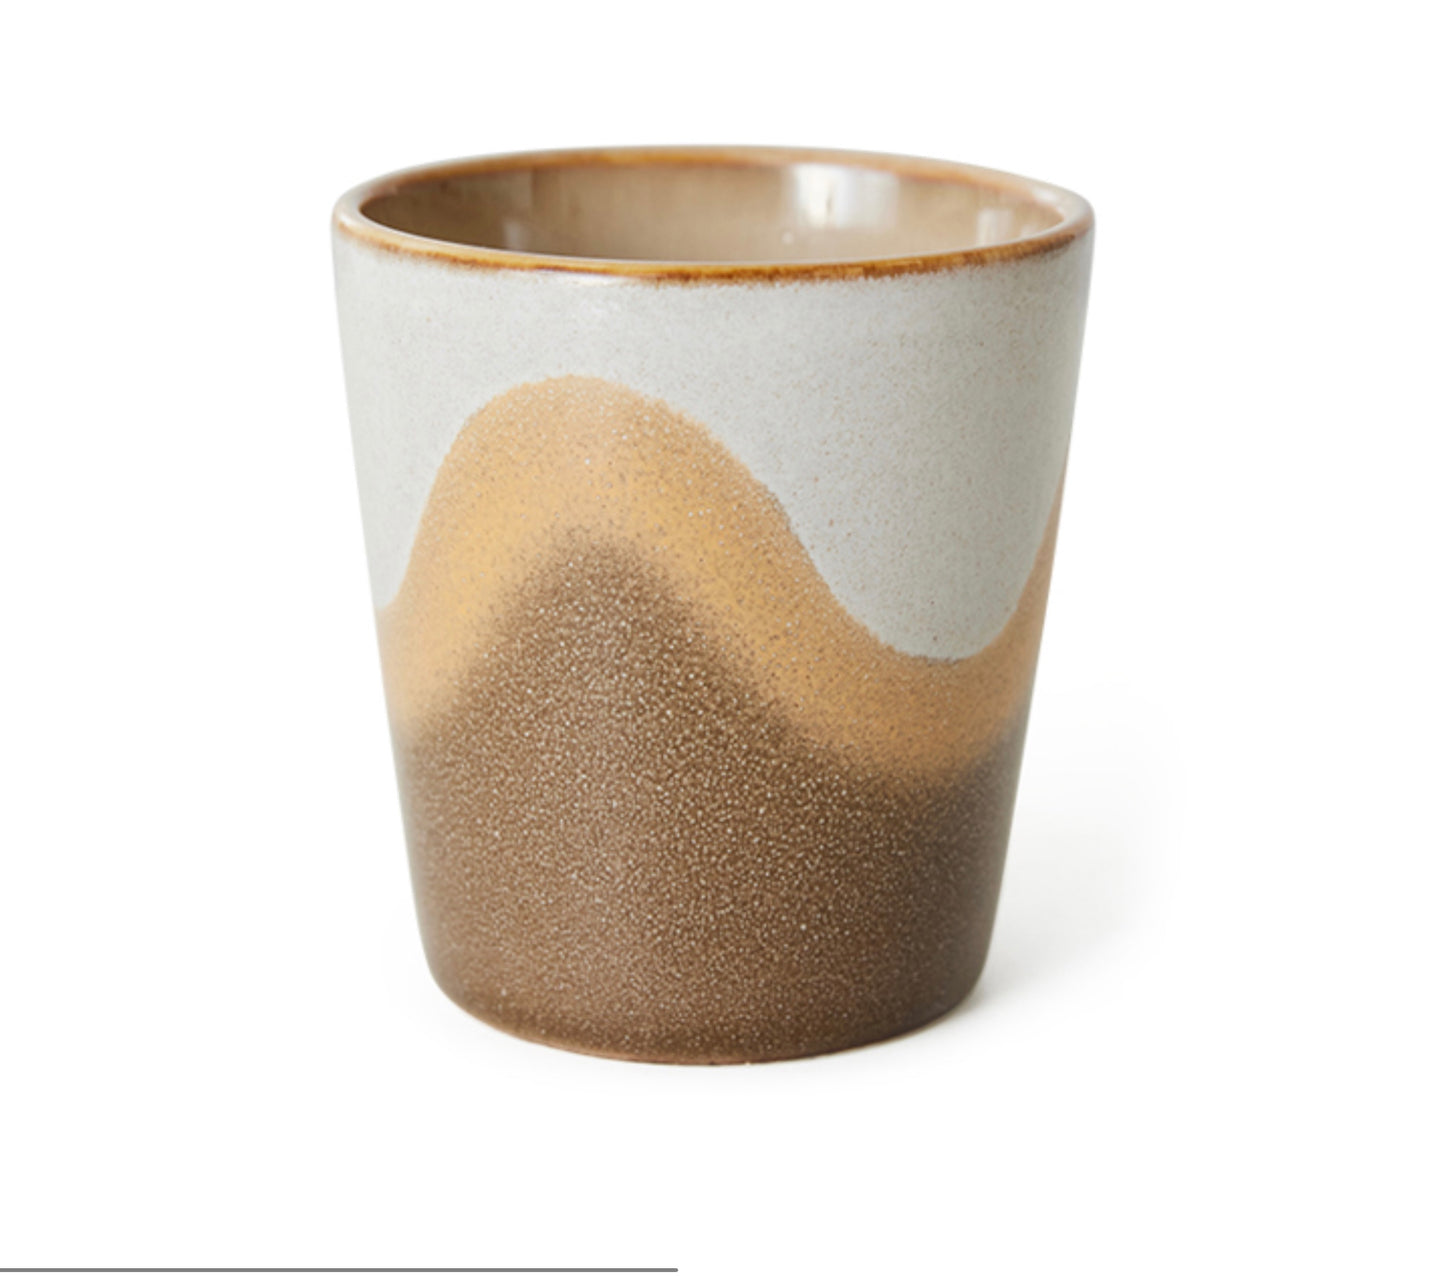 Hk living - 70s ceramics coffee mug - brown waves